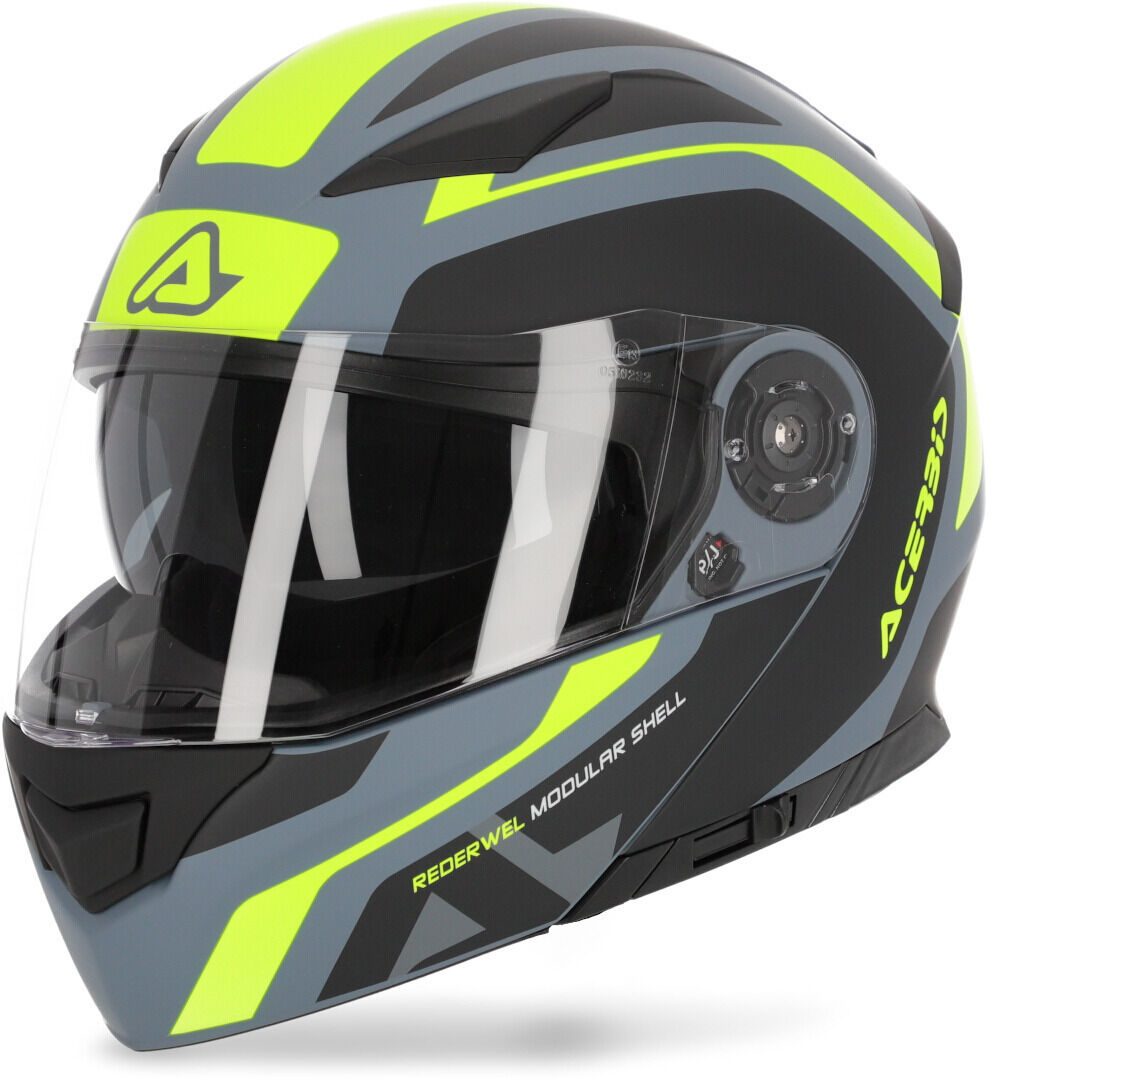 Photos - Motorcycle Helmet ACERBIS Rederwel P/j Graphics Helmet Unisex Grey Yellow Size: 2xl 0024516. 